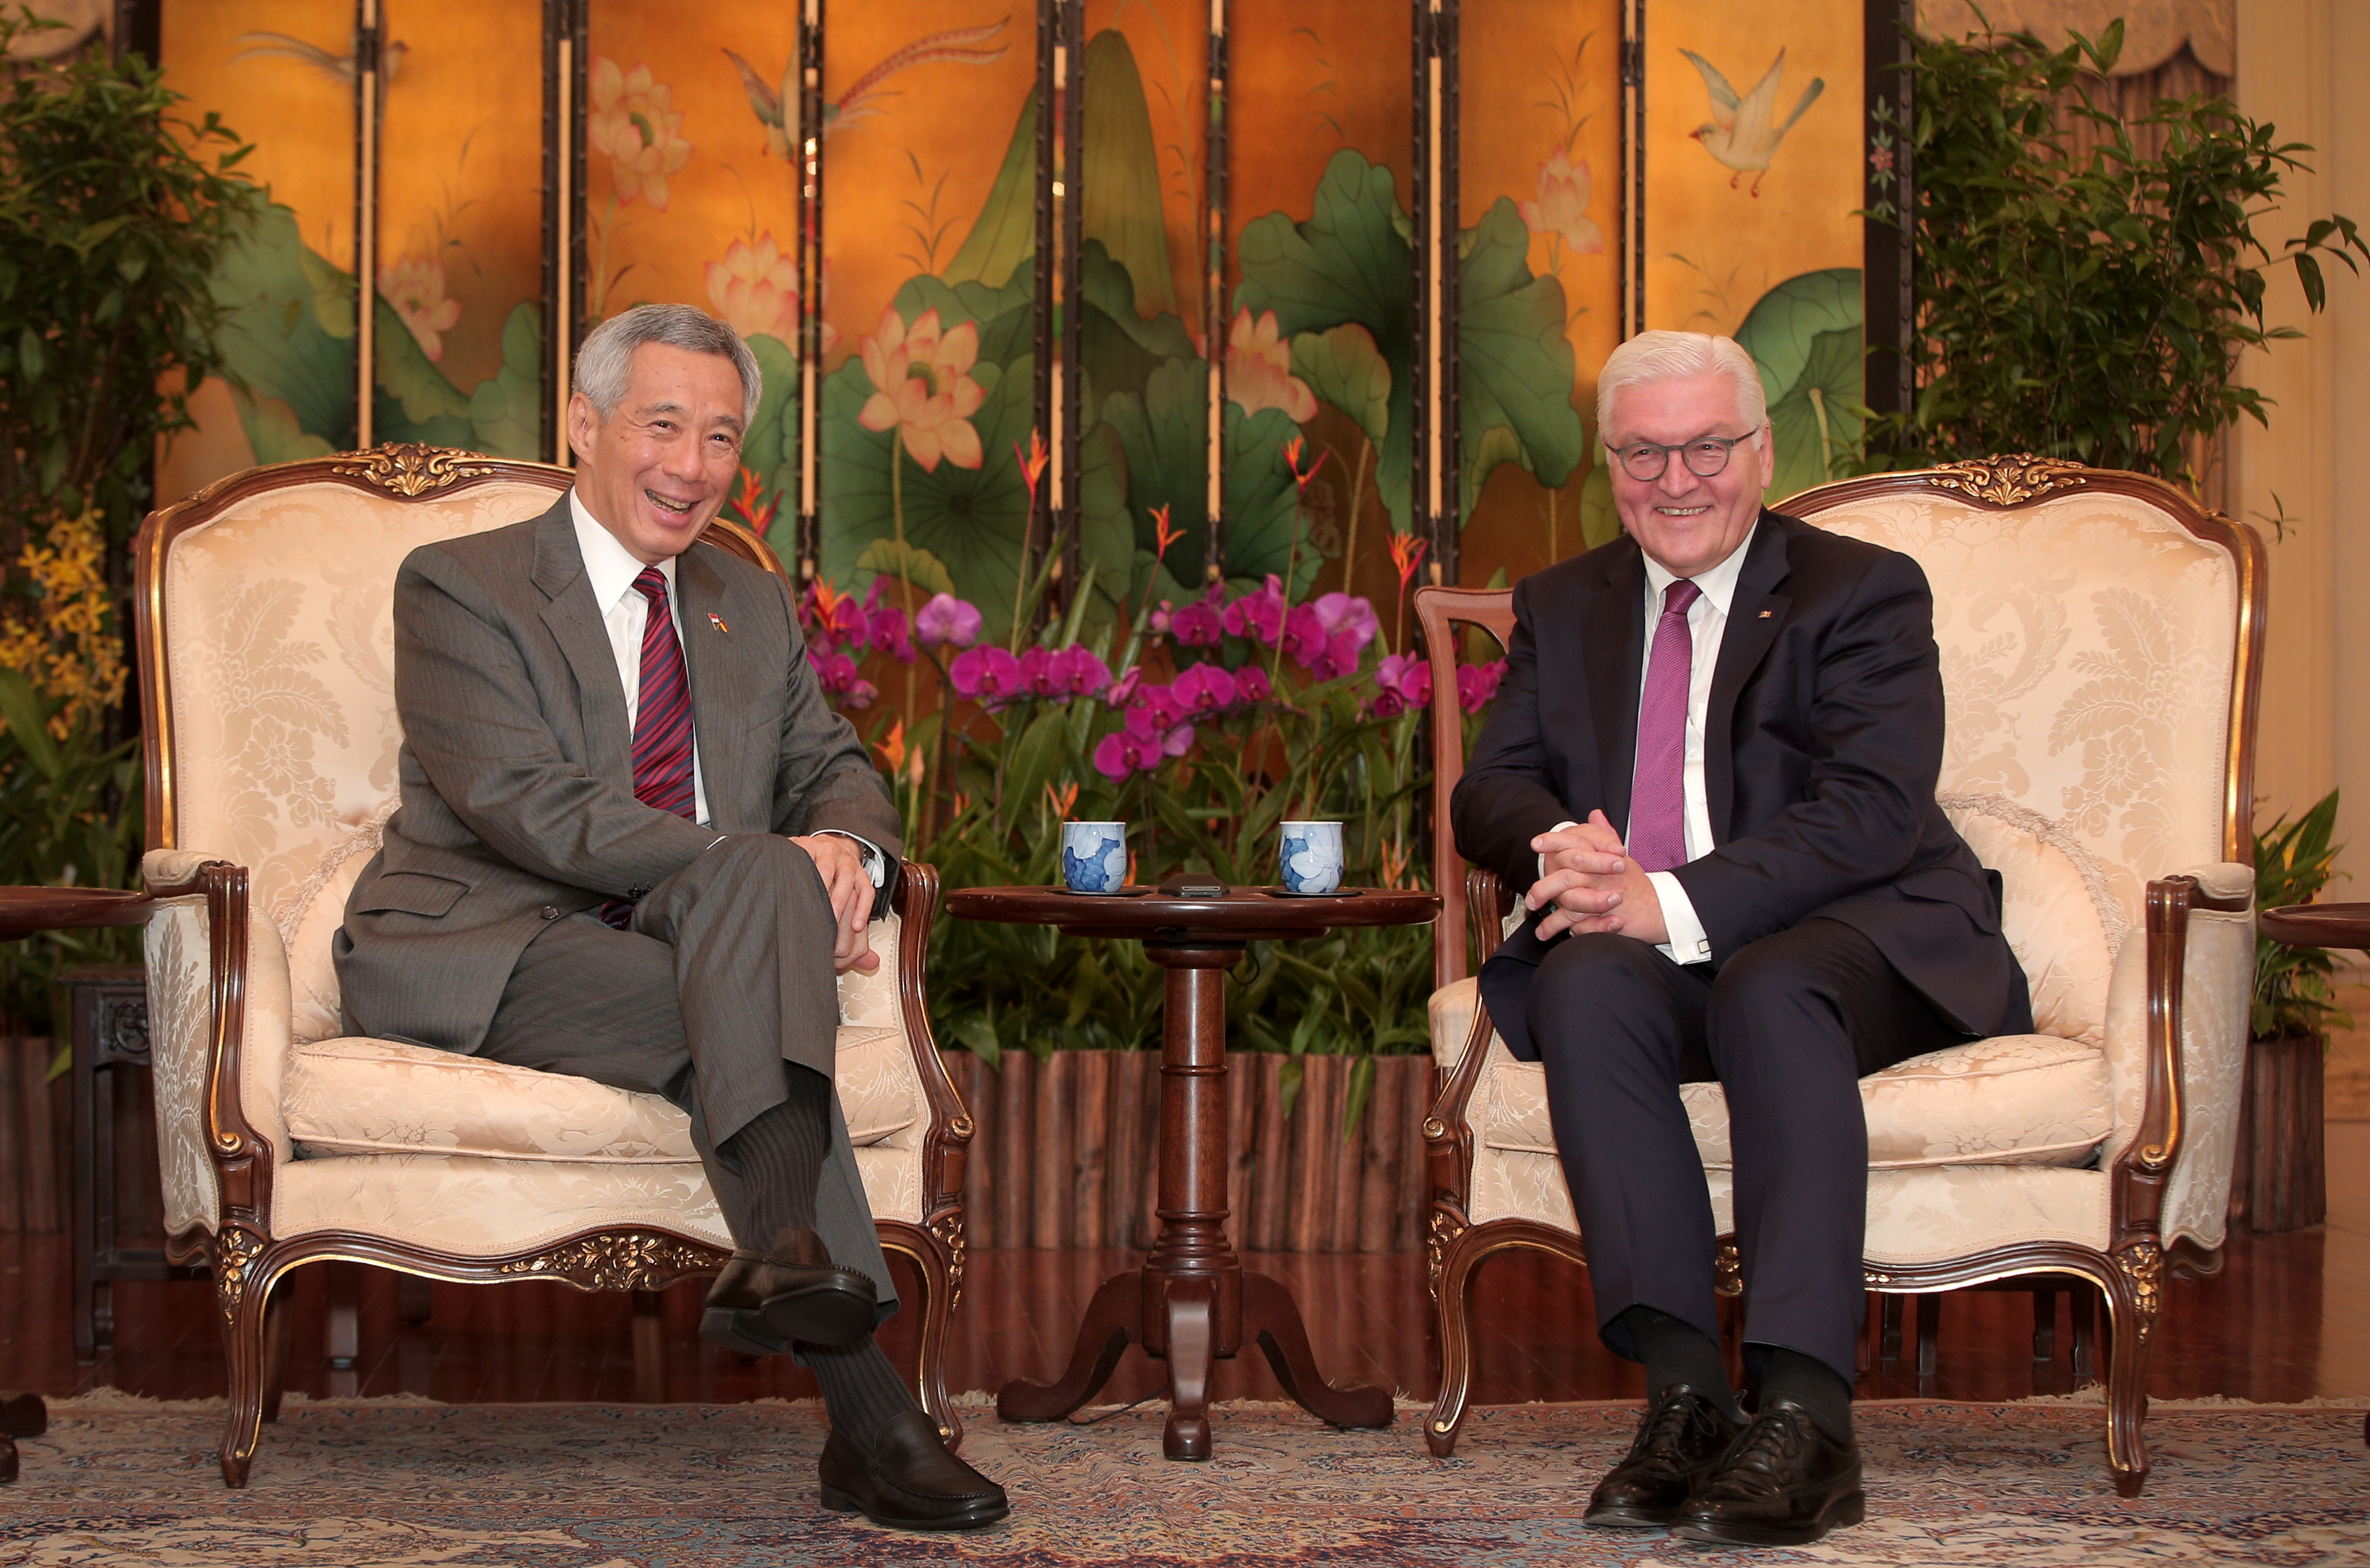 PM Lee Hsien Loong meeting with German President Frank-Walter Steinmeier on 2 Nov 2017 (MCI Photo by Terence Tan)